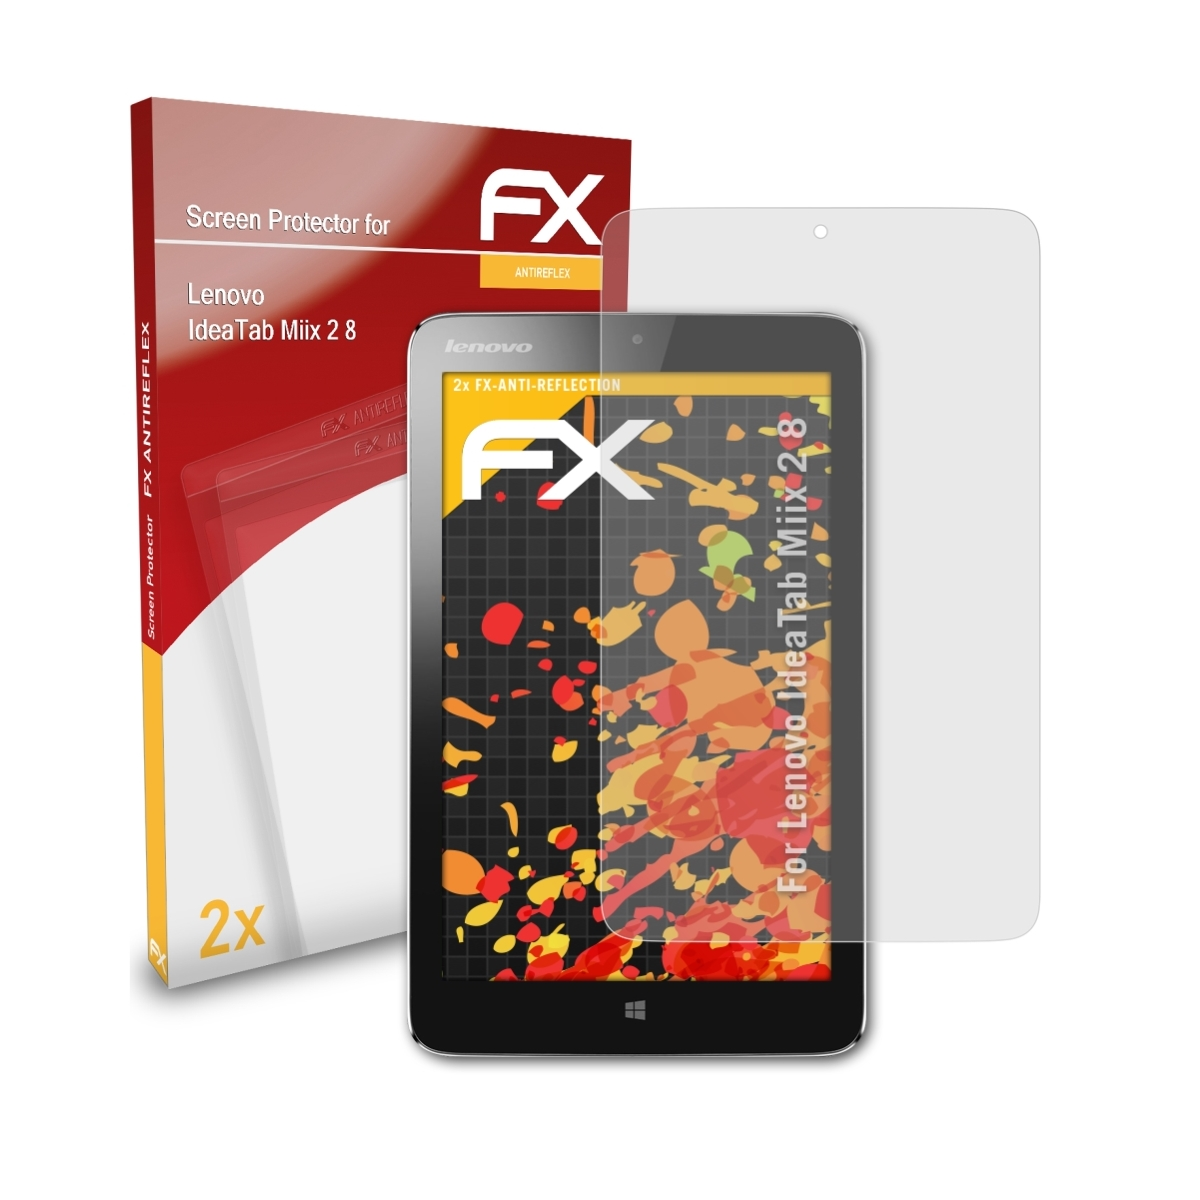 FX-Antireflex IdeaTab 2 ATFOLIX Miix 8) 2x Displayschutz(für Lenovo